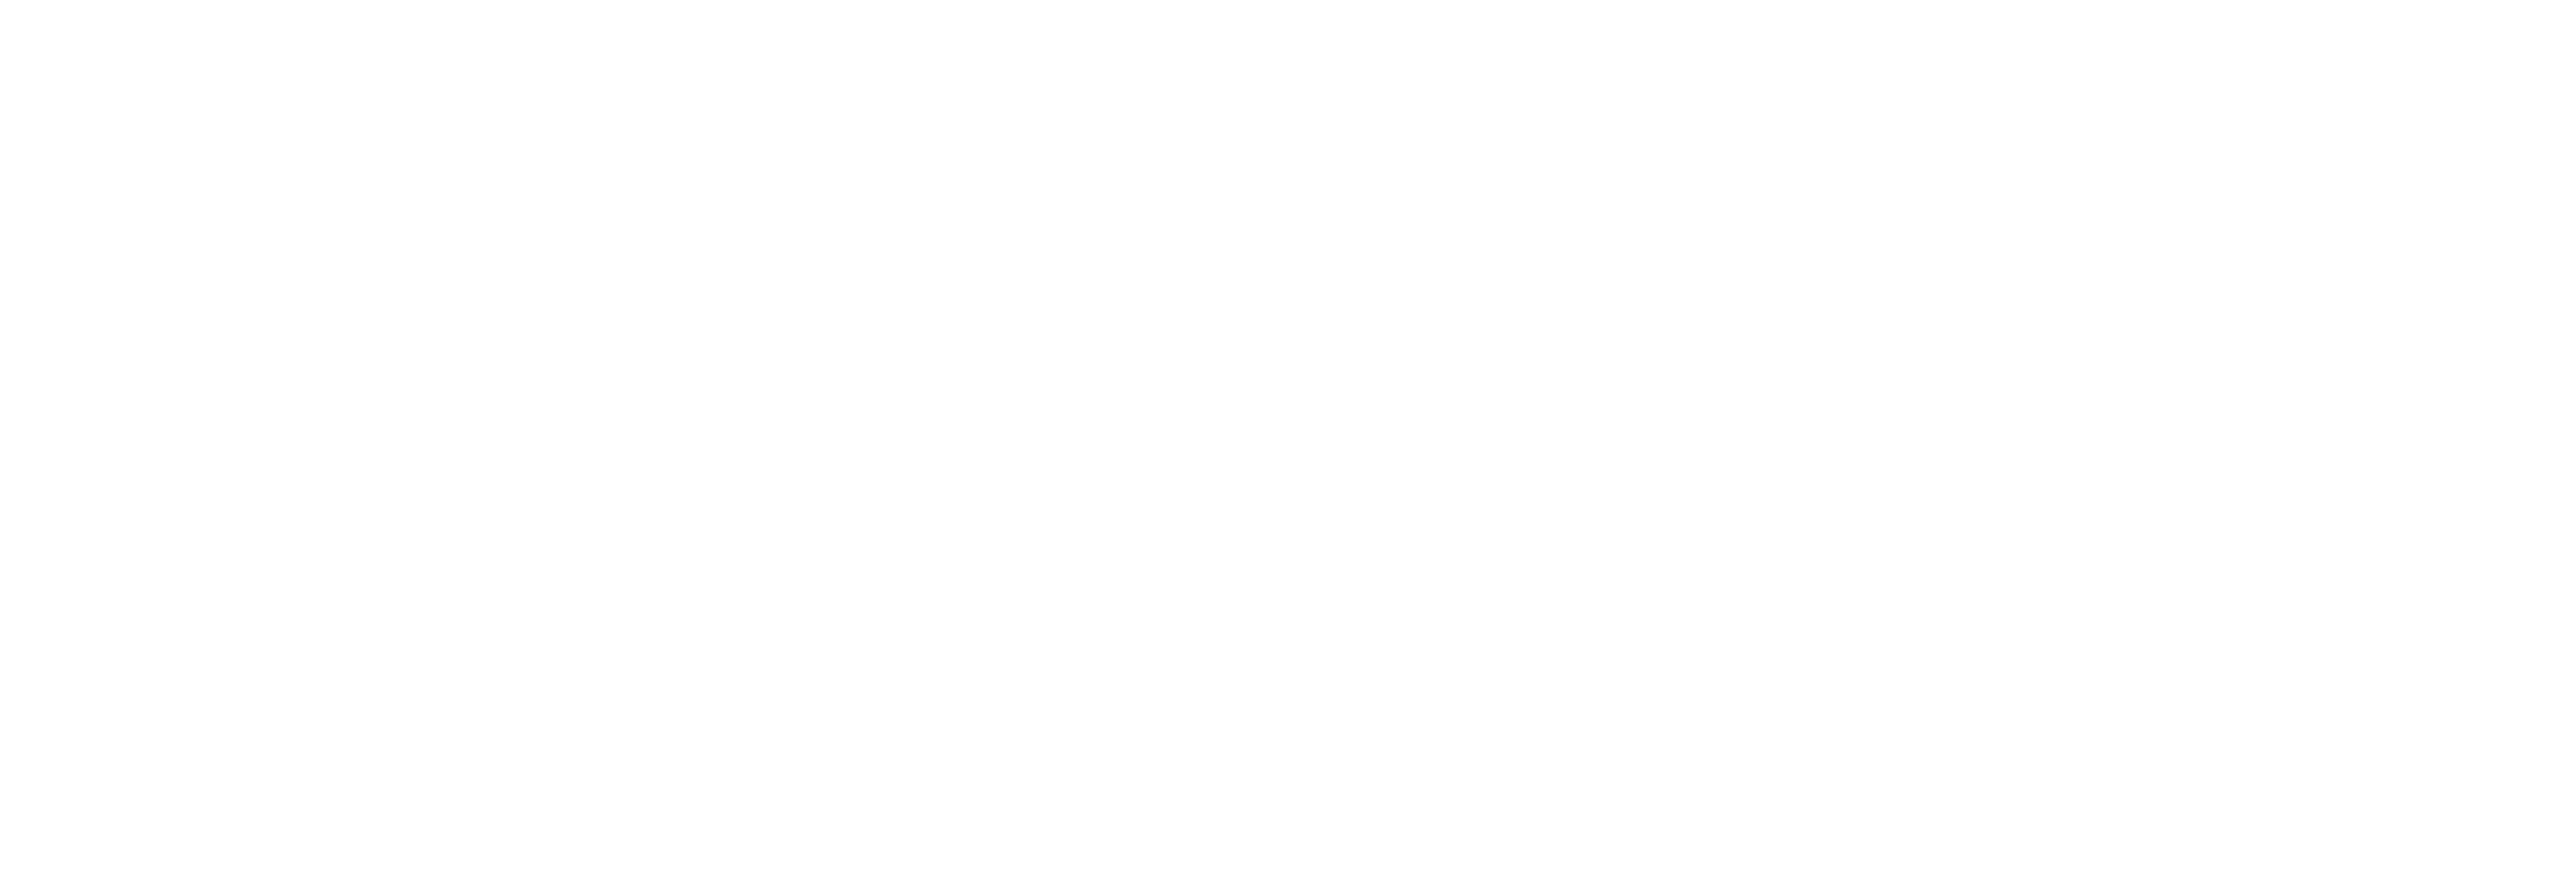 AniCura Spoedkliniek te Berchem logo